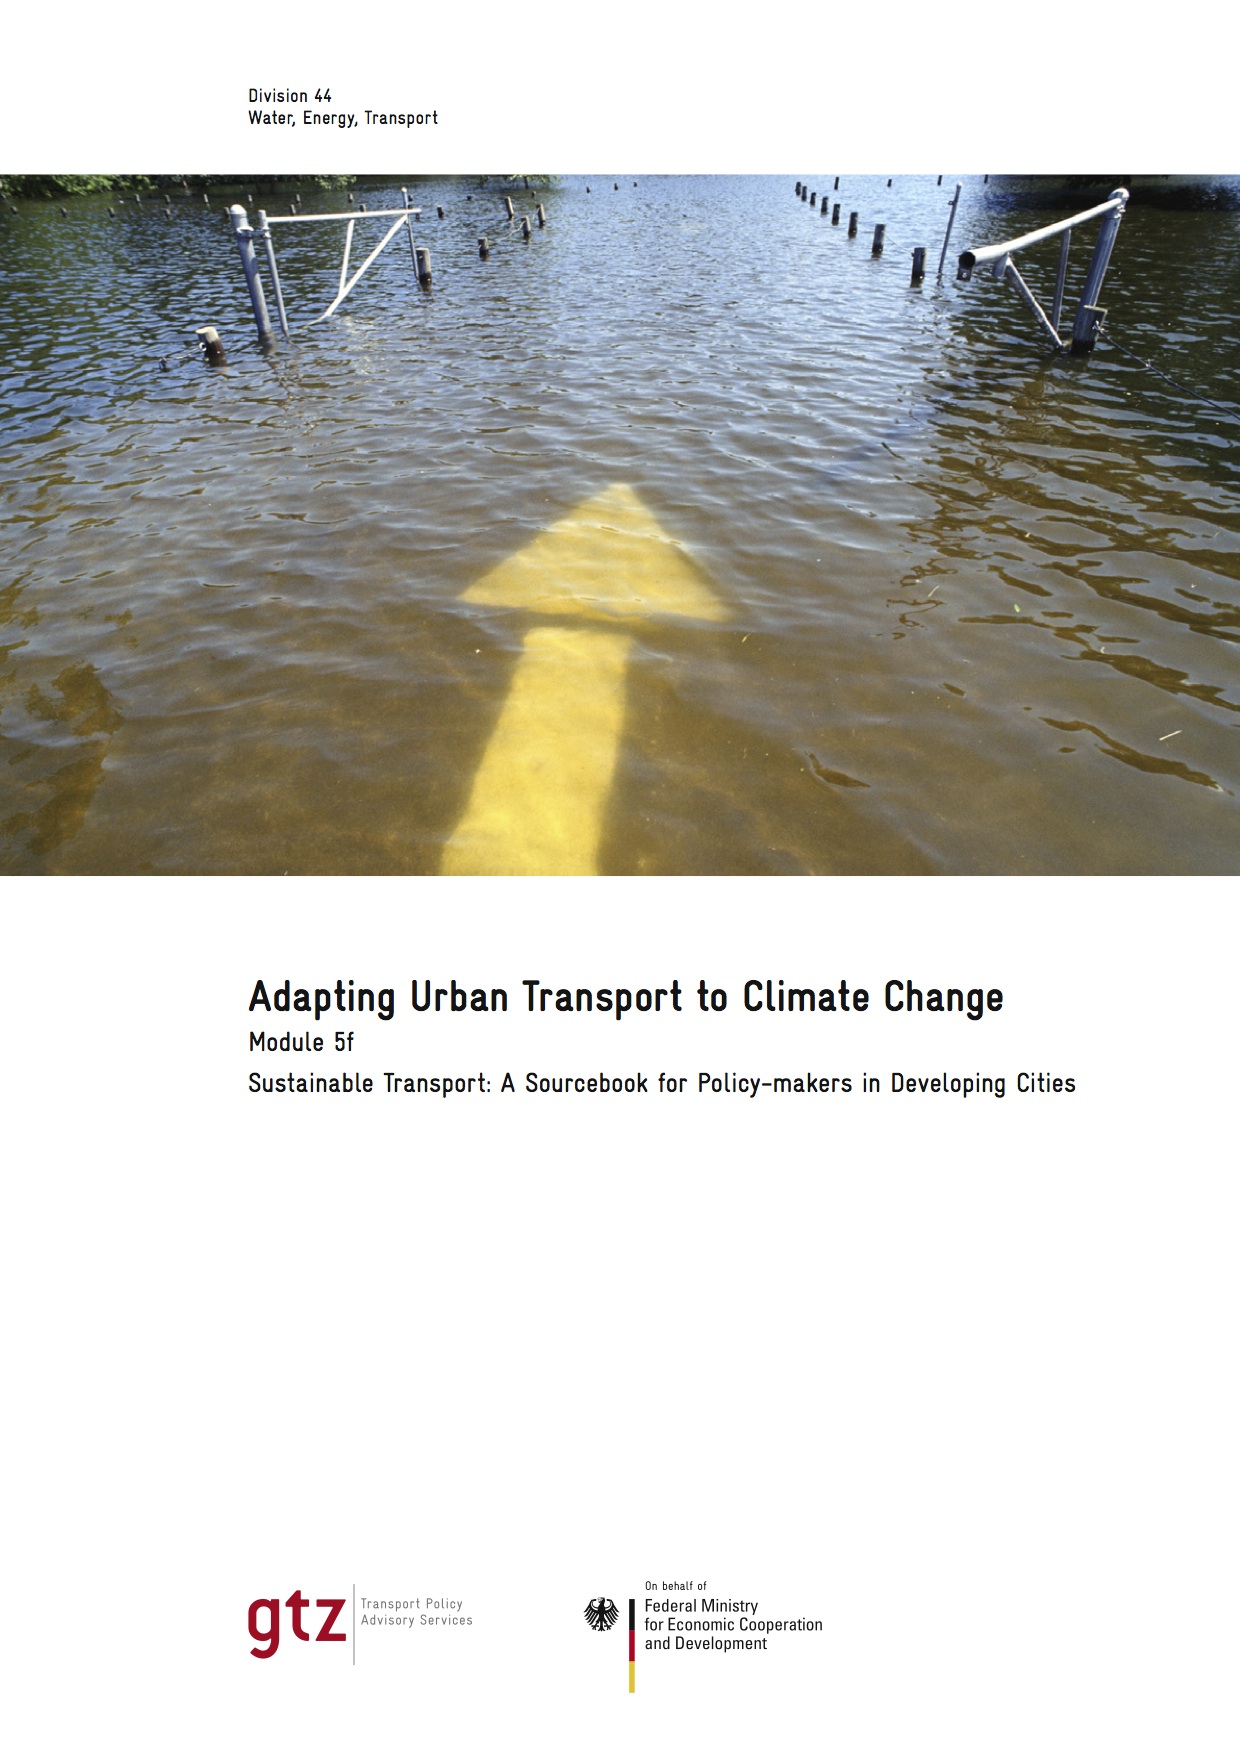 GIZ-Module-5f_Adapting-Urban-Transport-to-Climate-Change